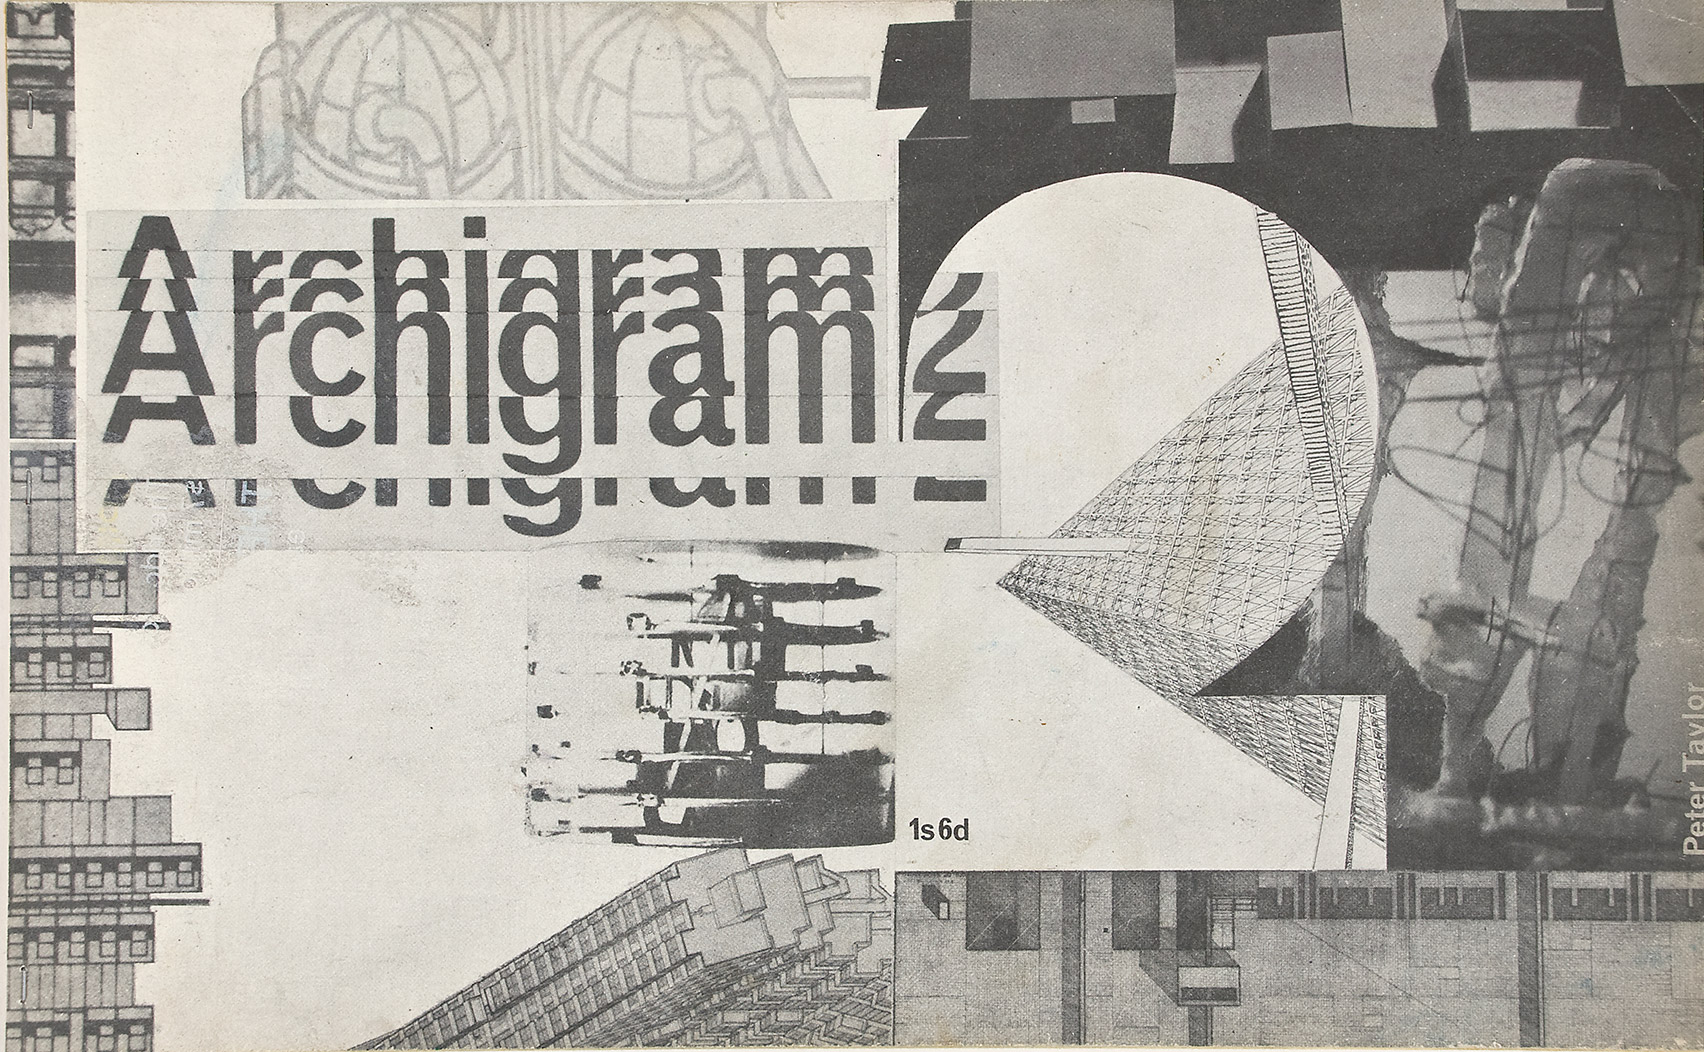 Issue 2 of Archigram magazine